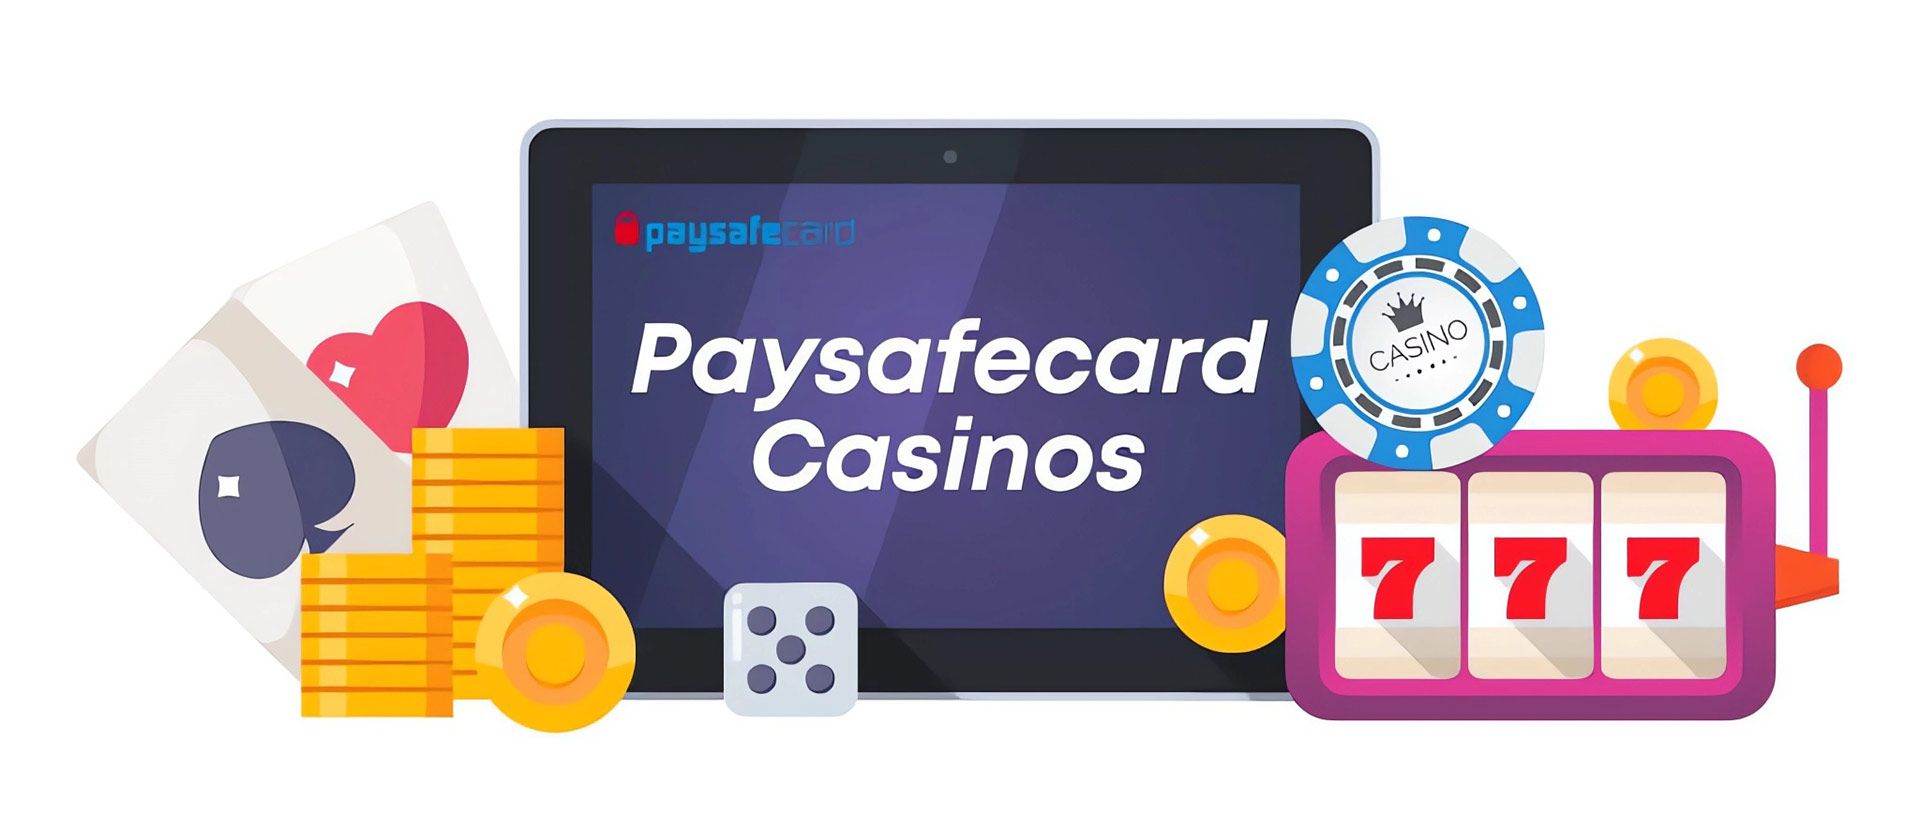 PaySafeCard casinos in New Zealand.